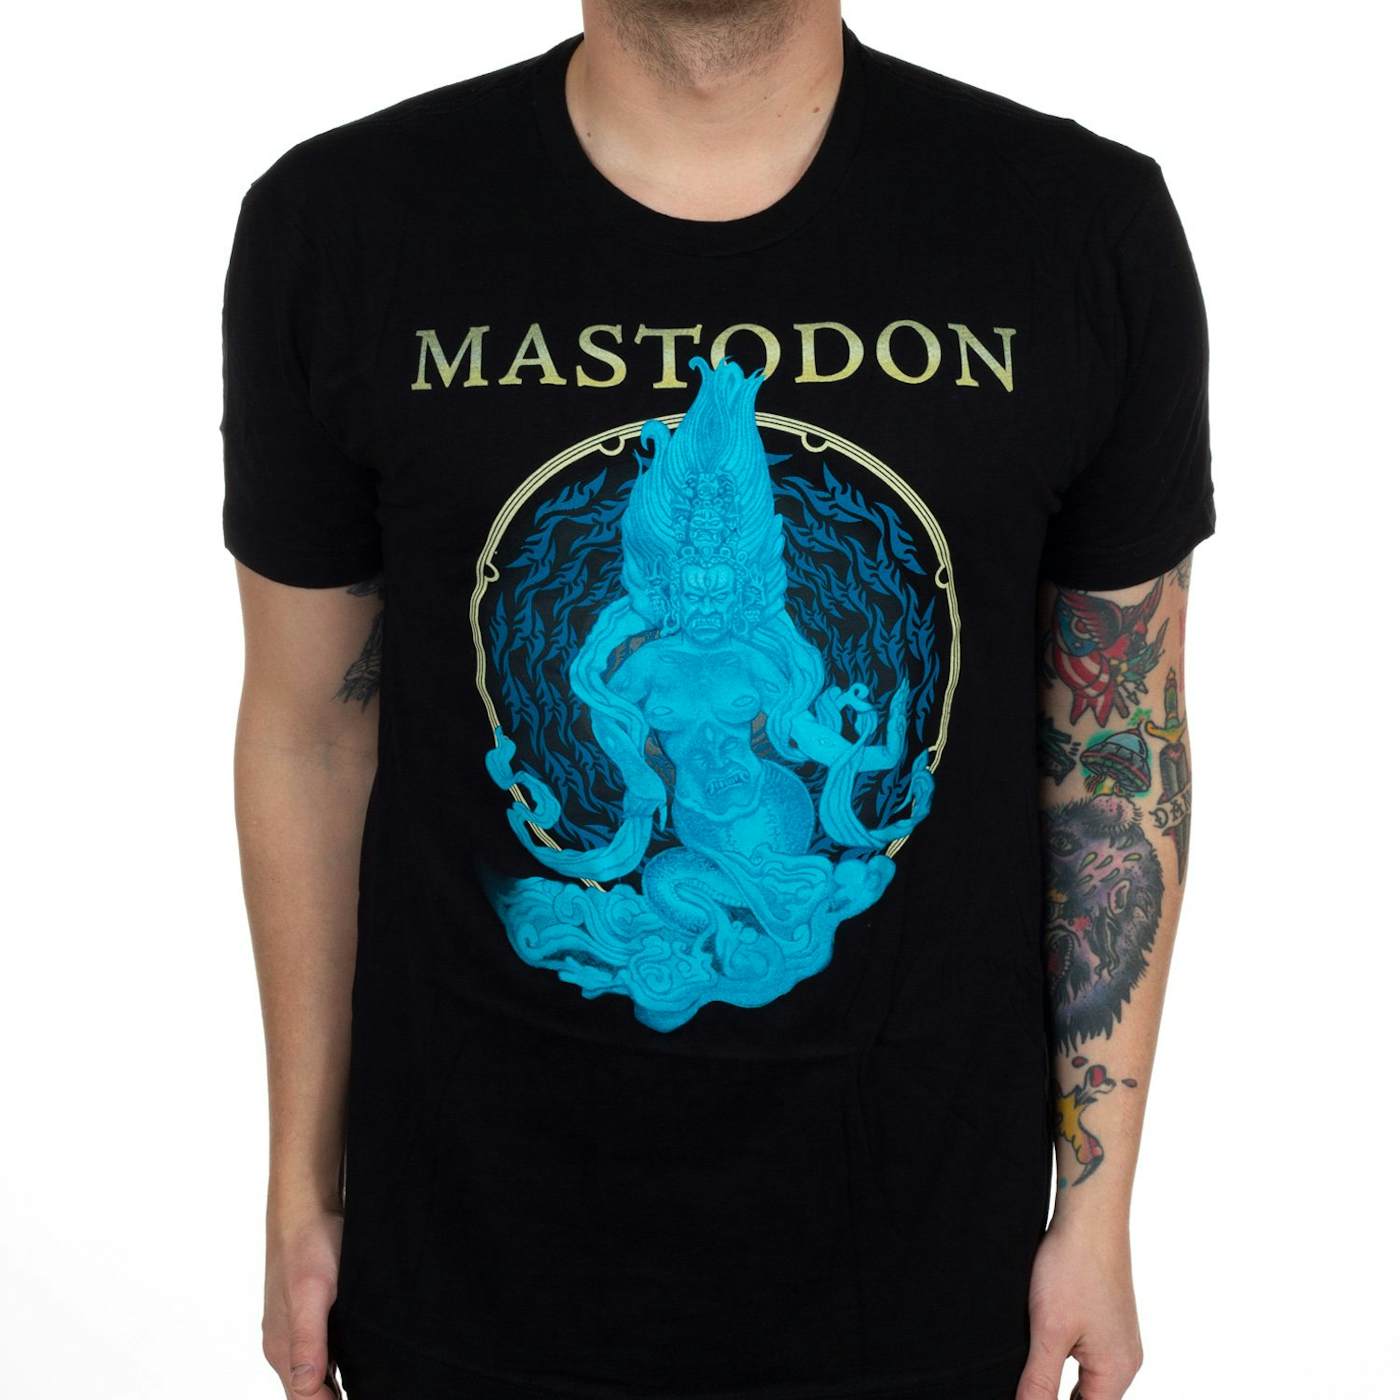 Mastodon "Seabeast" T-Shirt